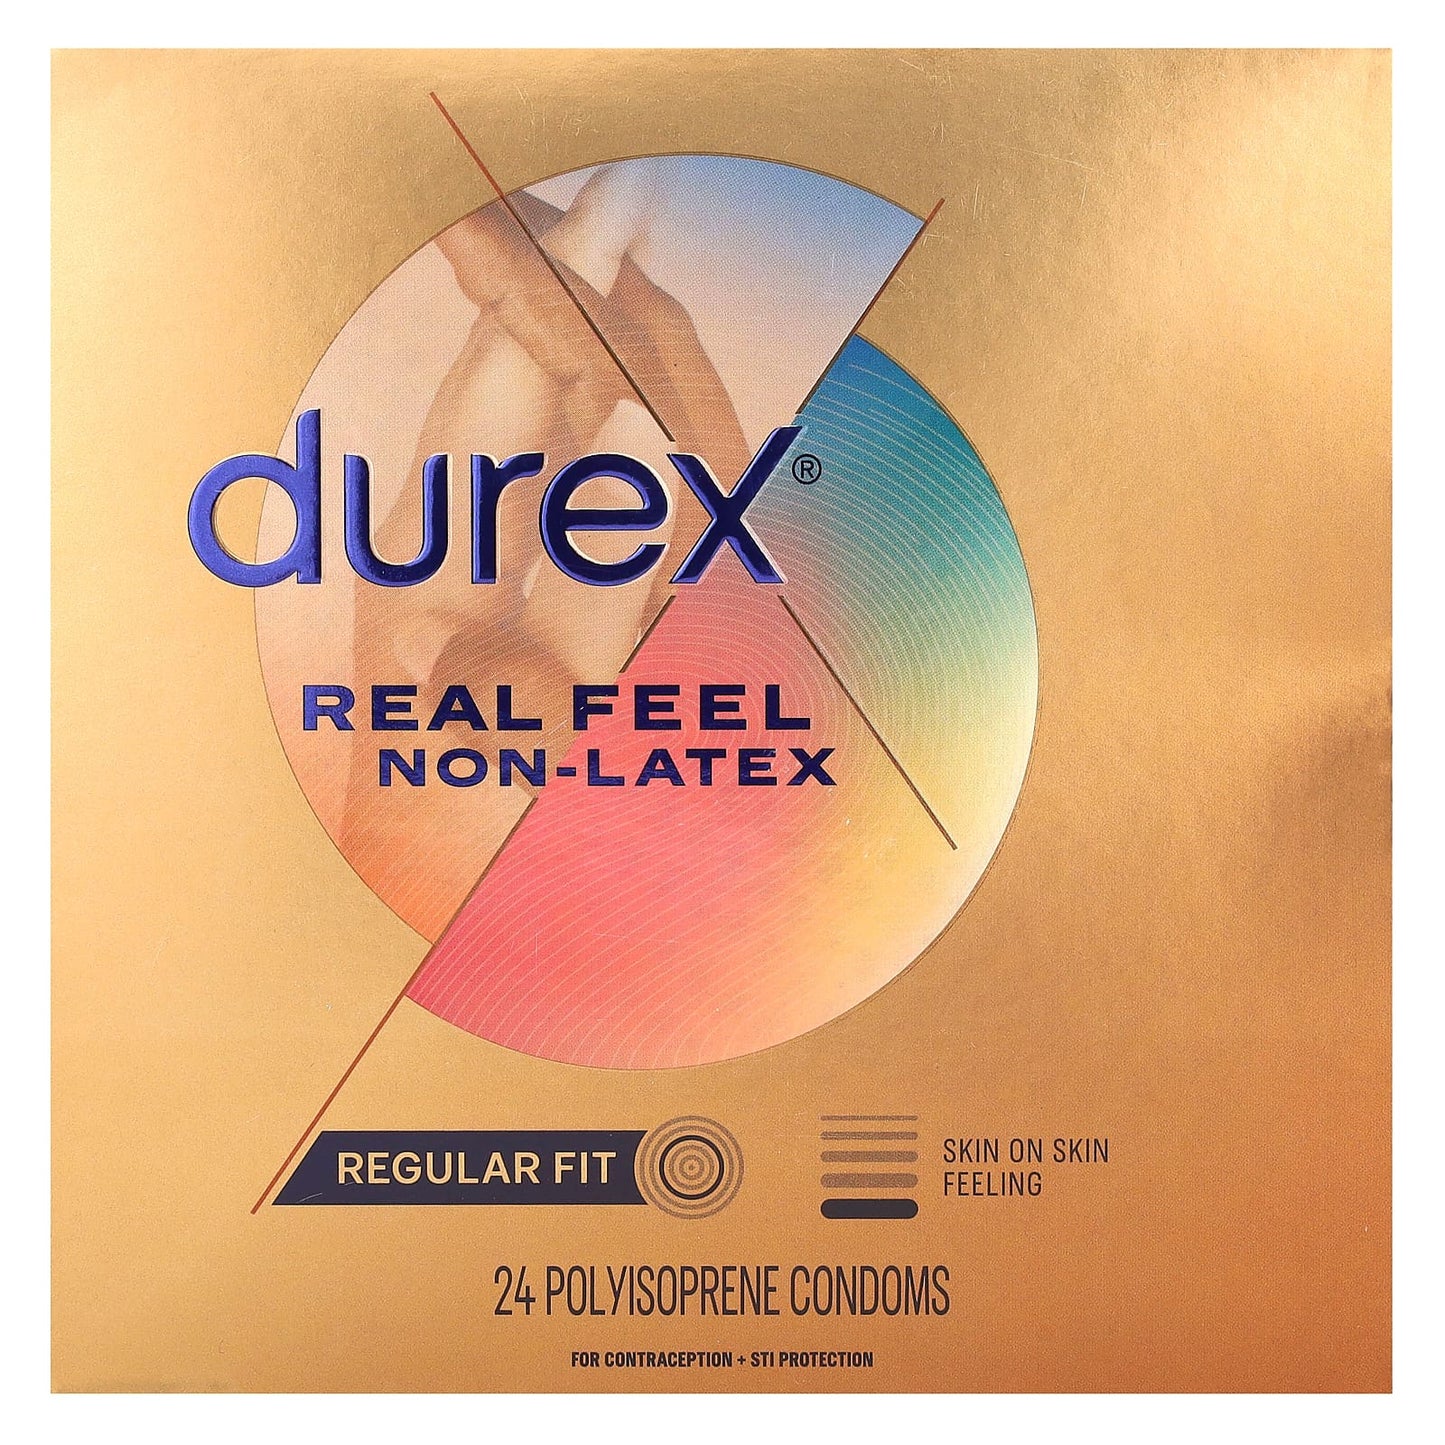 Durex-Real Feel Non-Latex-Regular Fit -24 Polyisoprene Condoms